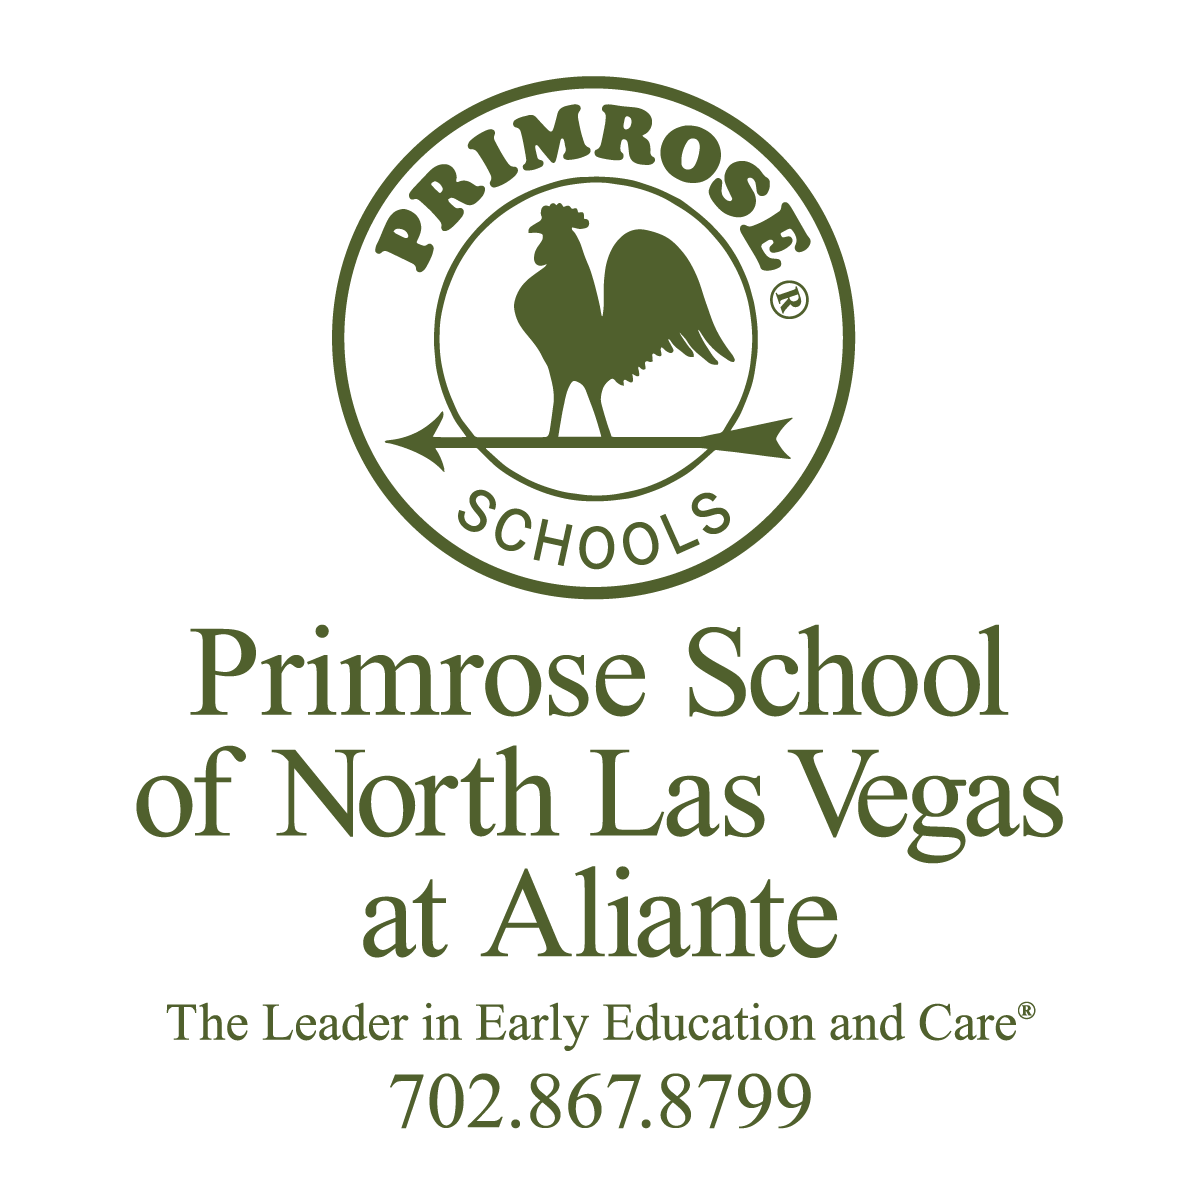 Primrose School of North Las Vegas at Aliante